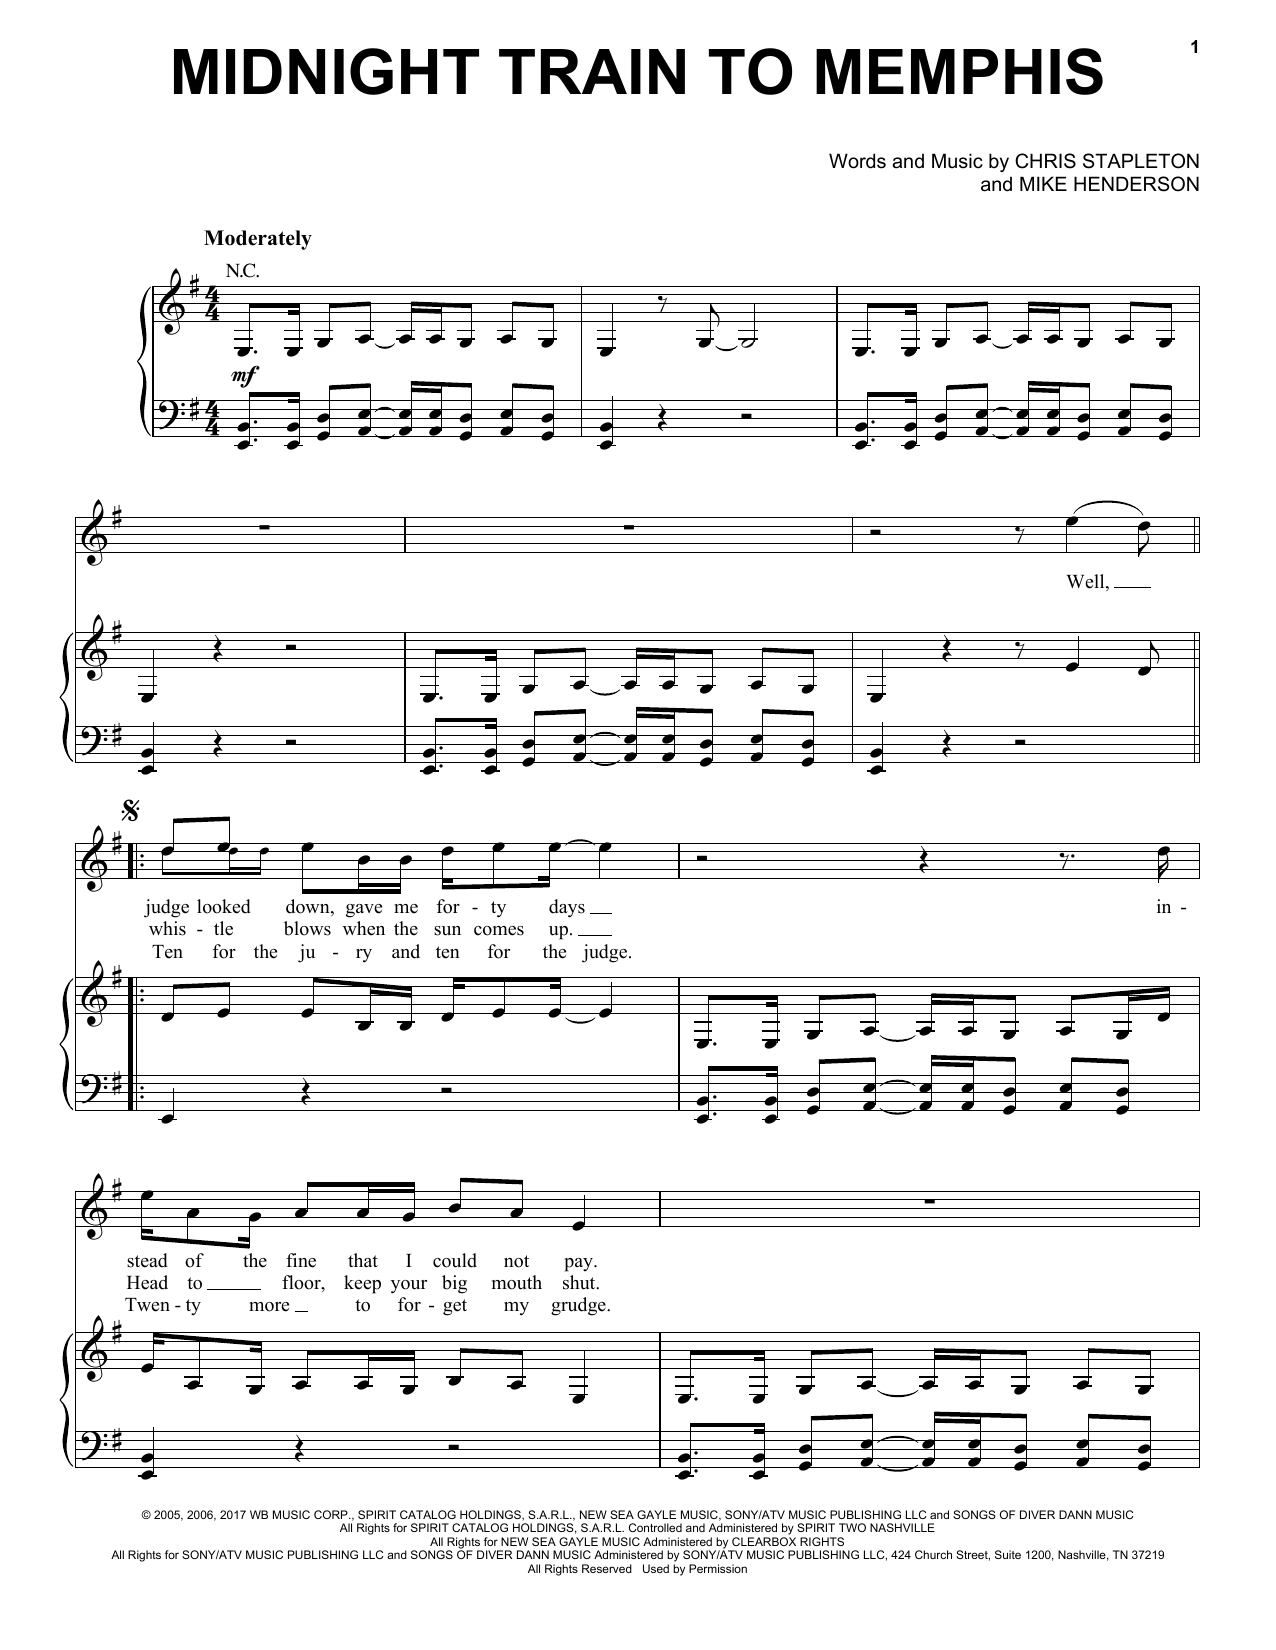 Chris Stapleton Midnight Train To Memphis Sheet Music Notes & Chords for Guitar Chords/Lyrics - Download or Print PDF